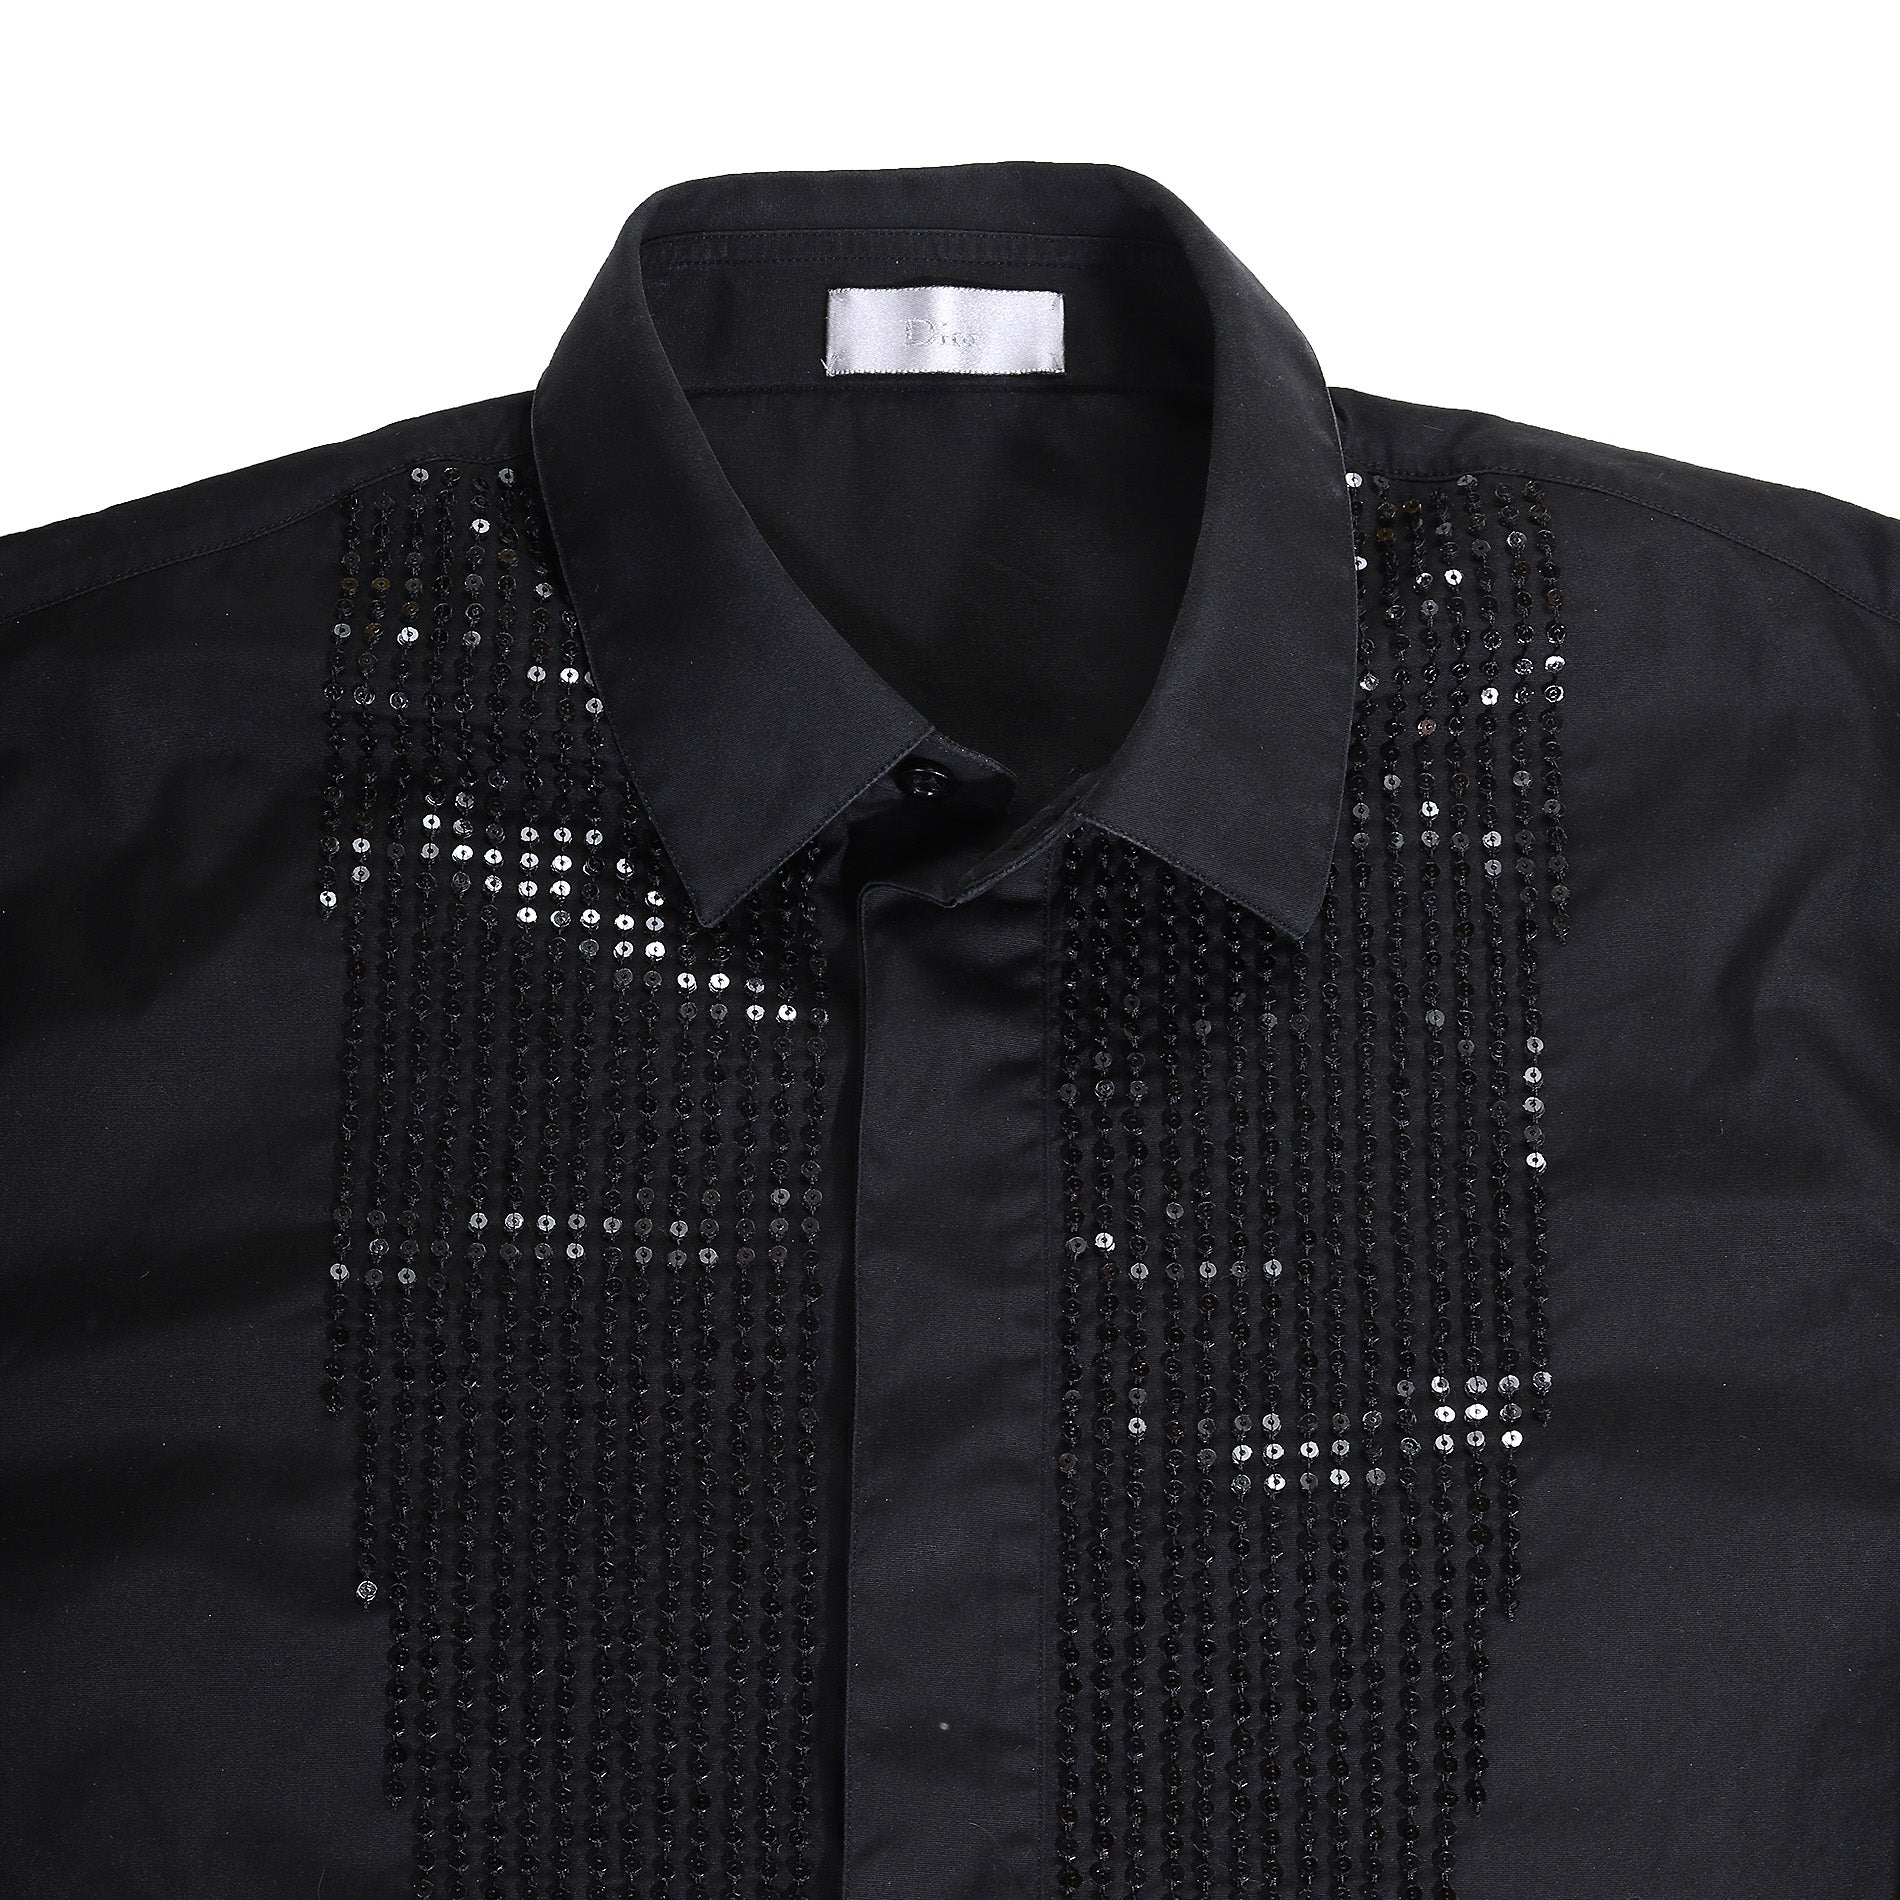 Dior Homme FW07 Navigate Black Sequin Shirt